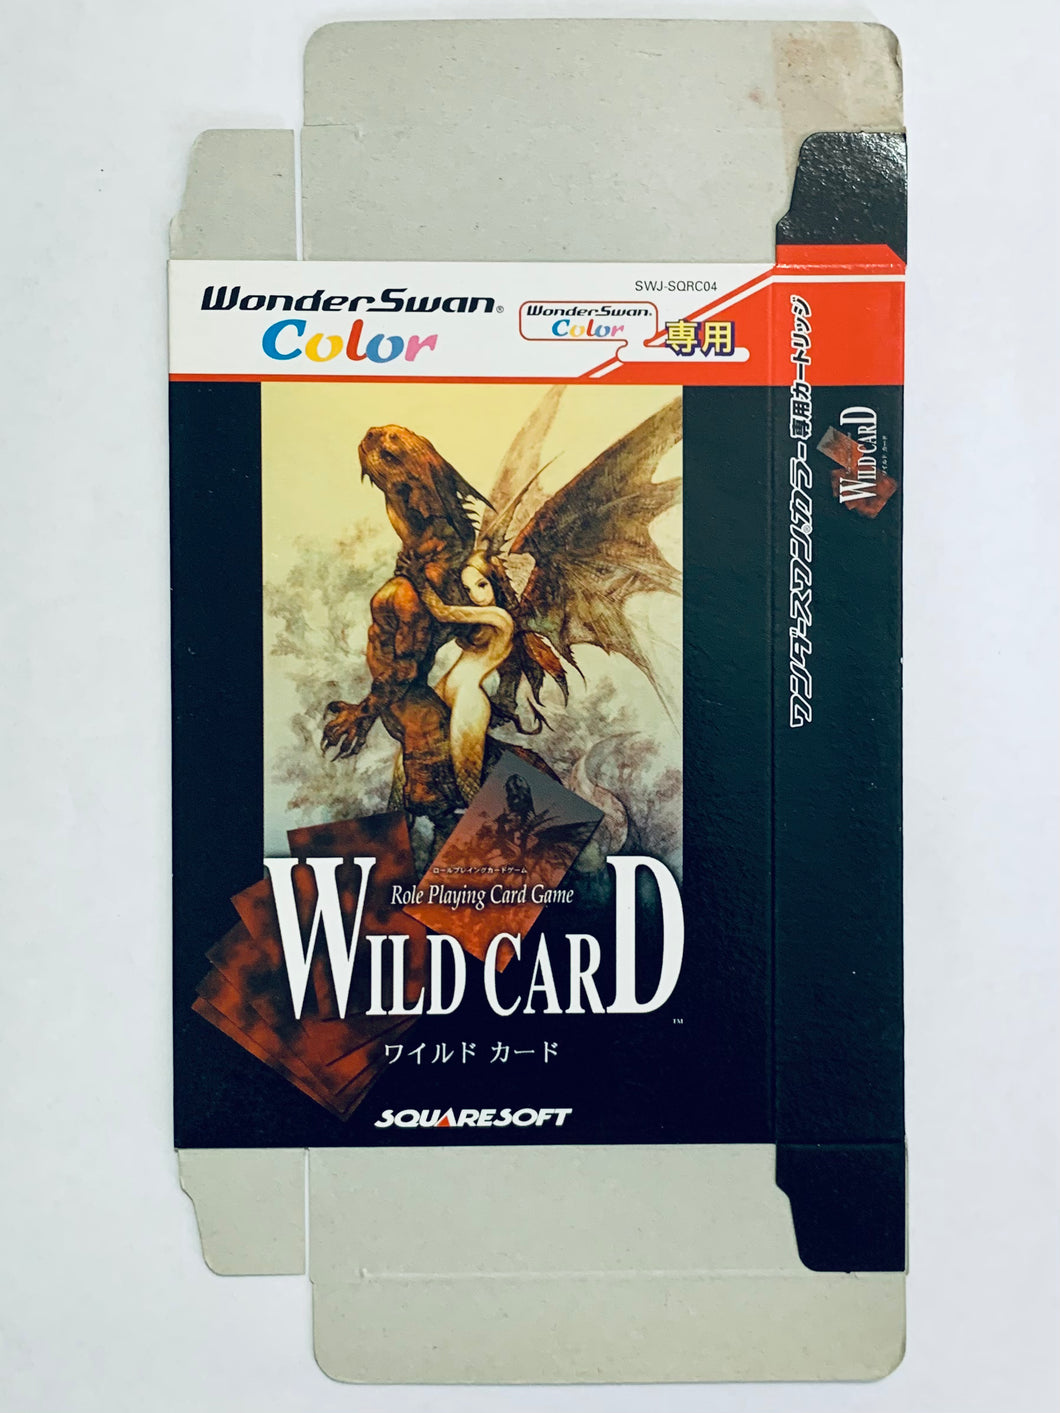 Wild Card - WonderSwan Color - WSC - JP - Box Only (SWJ-SQRC04)